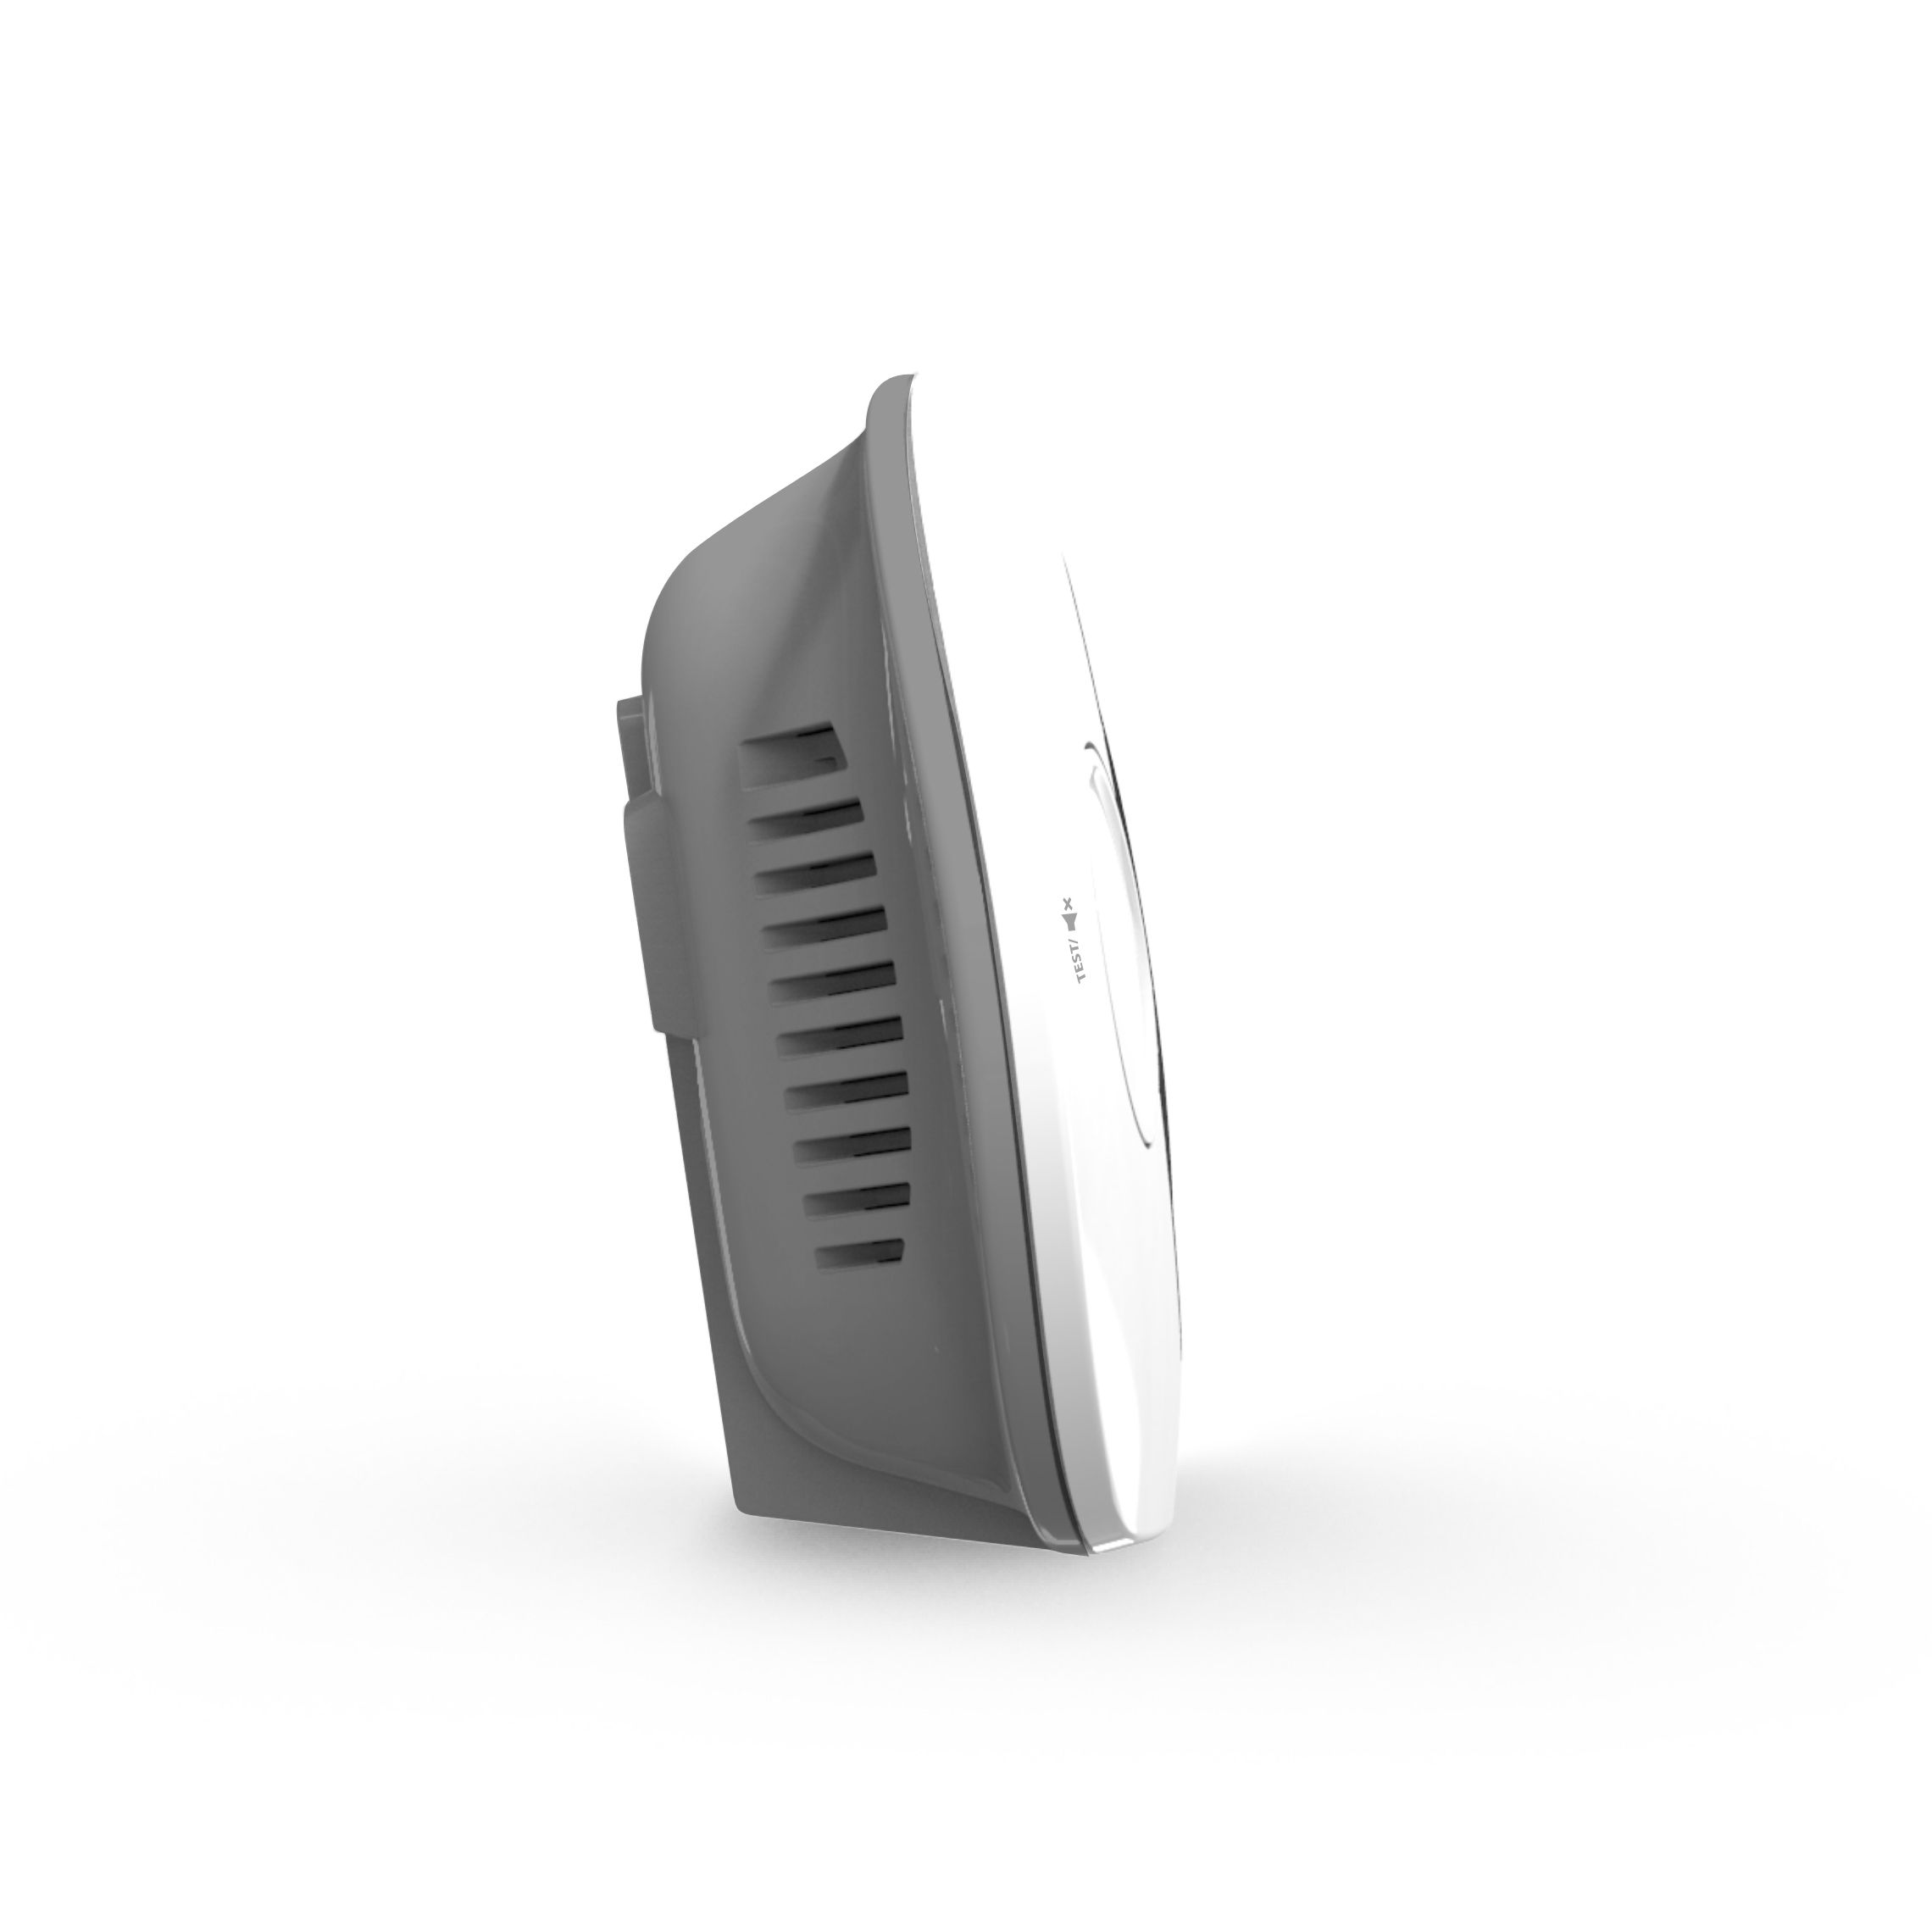 FireAngel Digital FA3322-EUX10 Carbon monoxide Alarm with 10-year lifetime battery